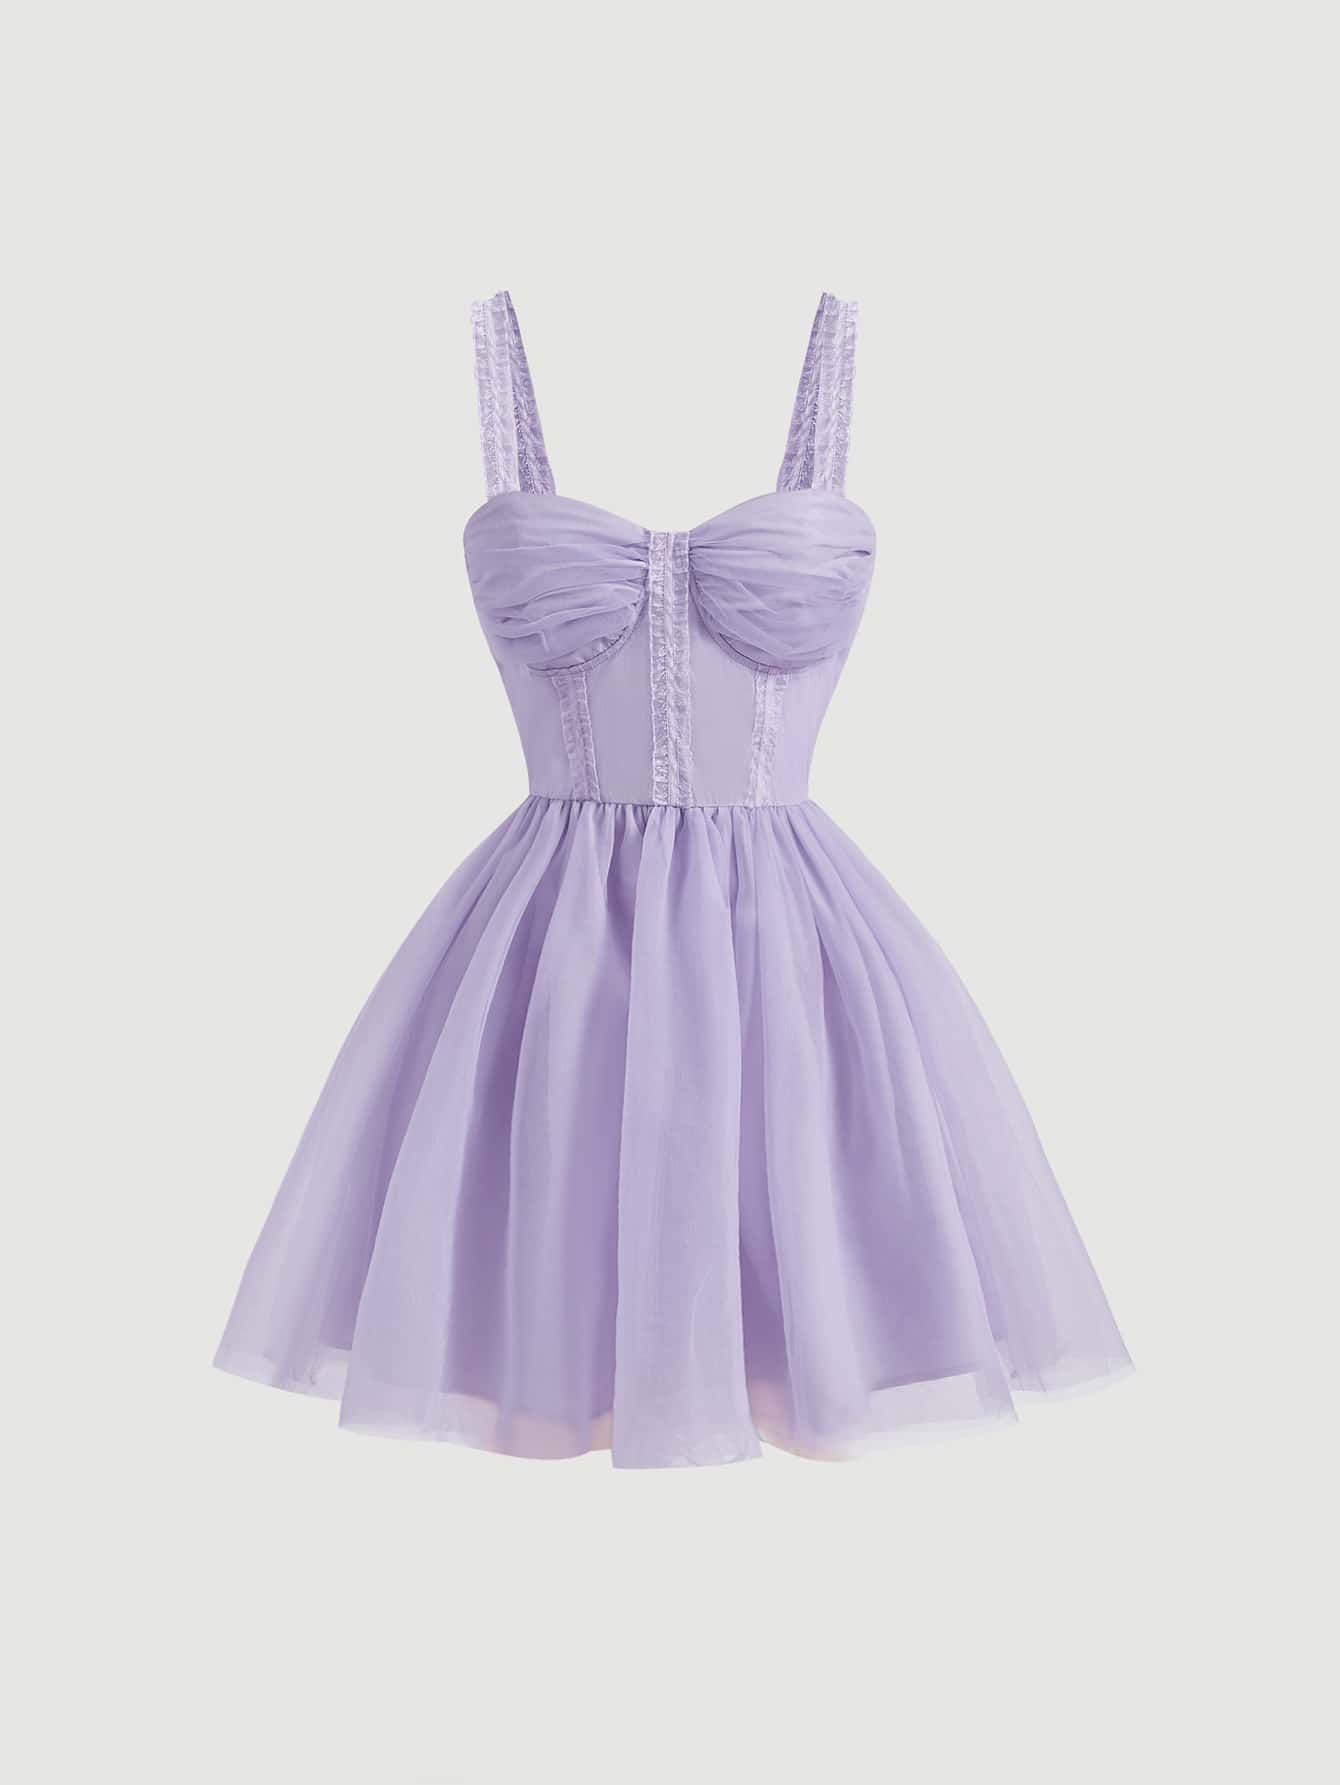 Purple Dress: Vibrant and Elegant Attire for Every Occasion